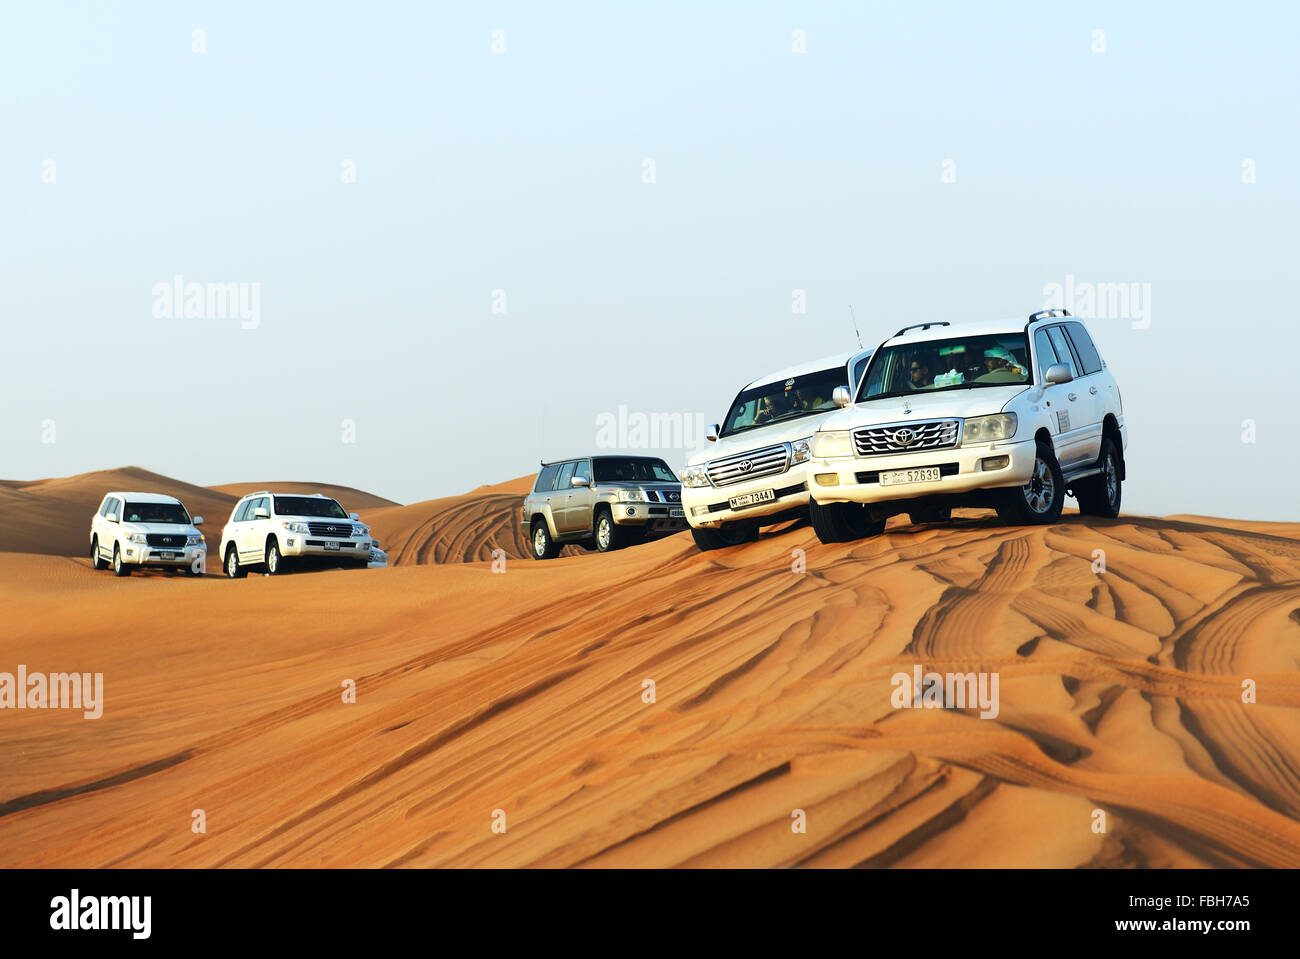 The Dubai desert trip in off-road car is major tourists attraction in Dubai Stock Photo